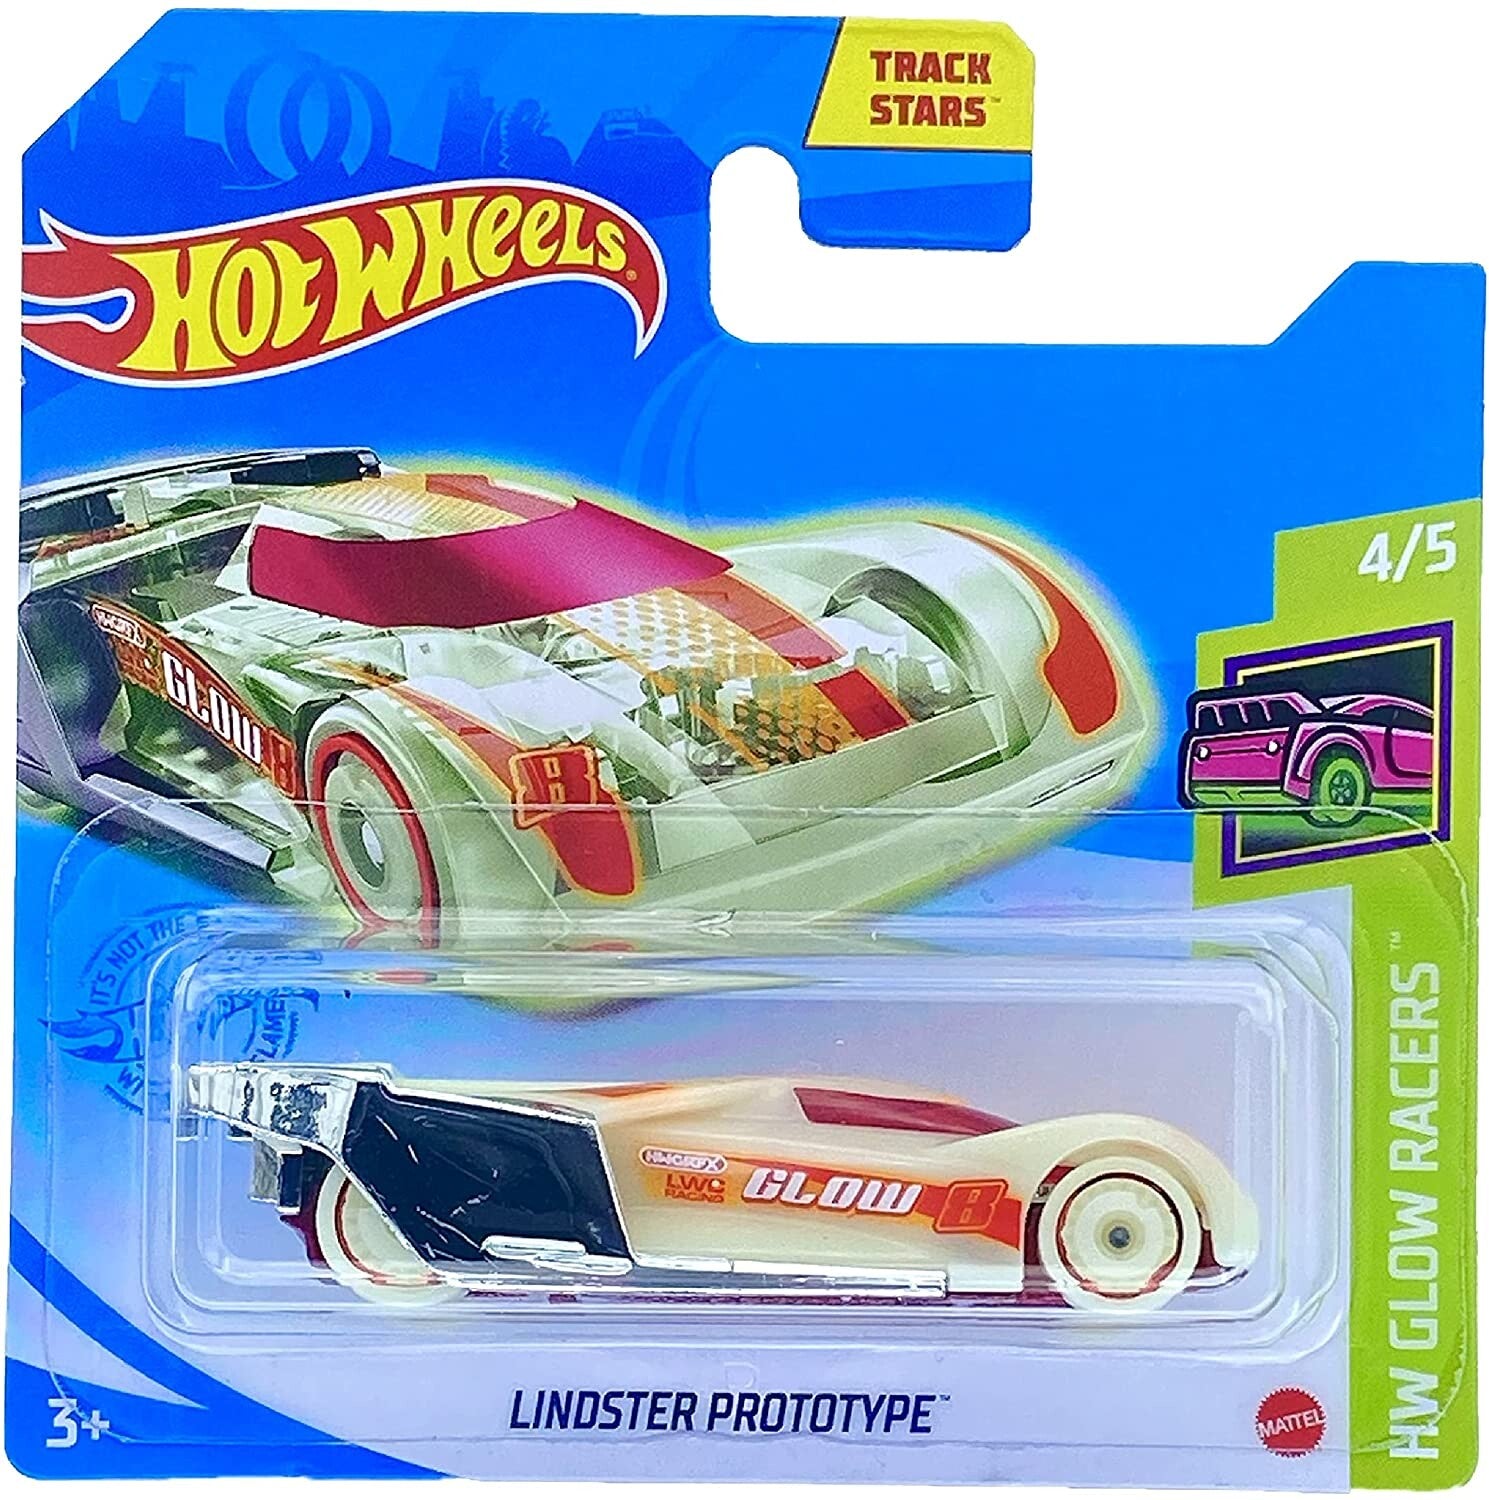 @ Hot Wheels - 2021 HW Glow Racers 4/5 Lindster Prototype 62/250 GRY16